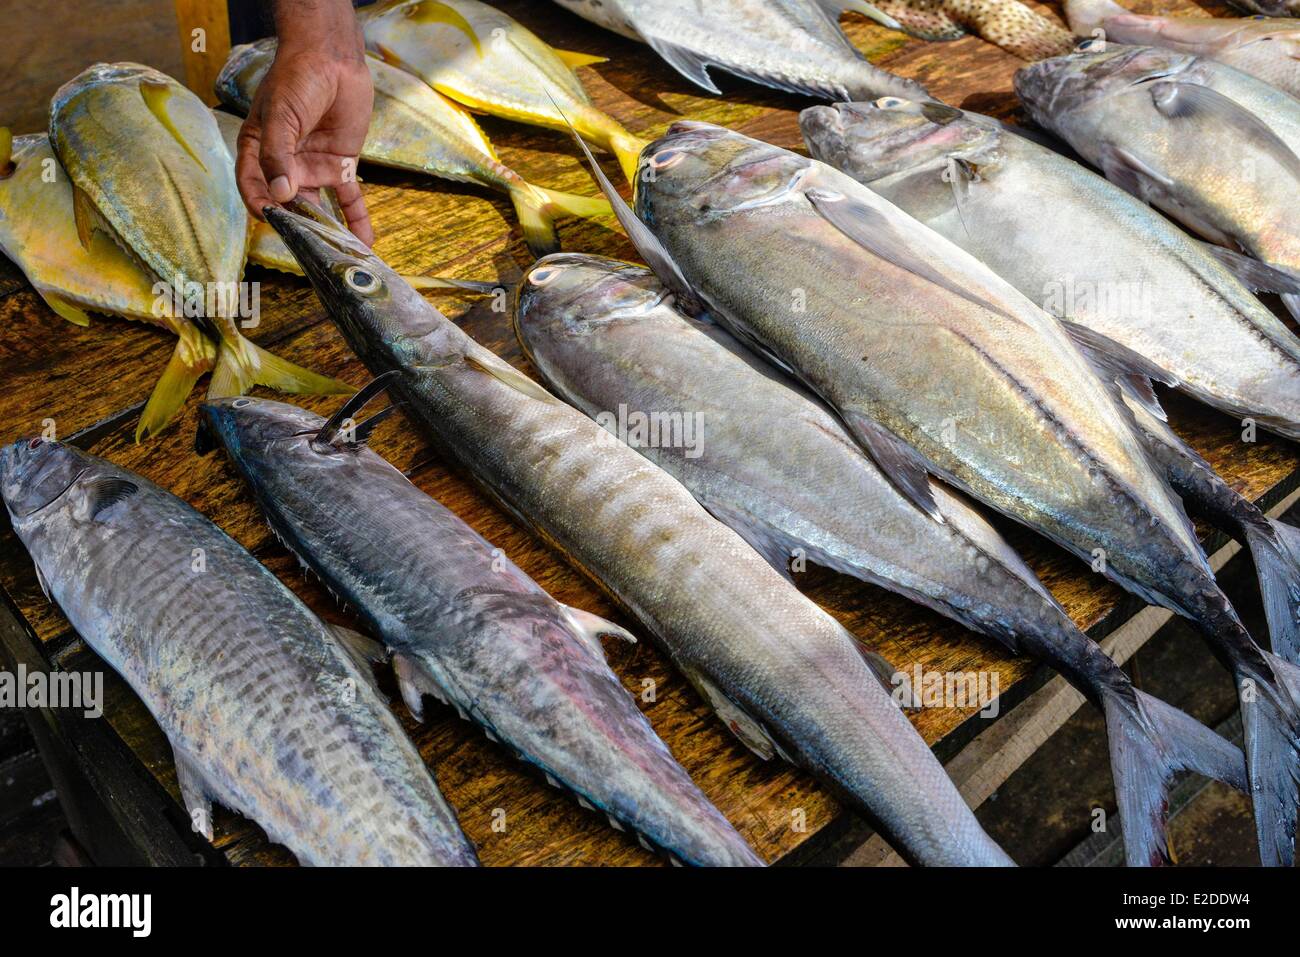 Sri Lanka Western Province Gampaha District Negombo fish market tunas and Baracudas aligned on a wooden stall Stock Photo